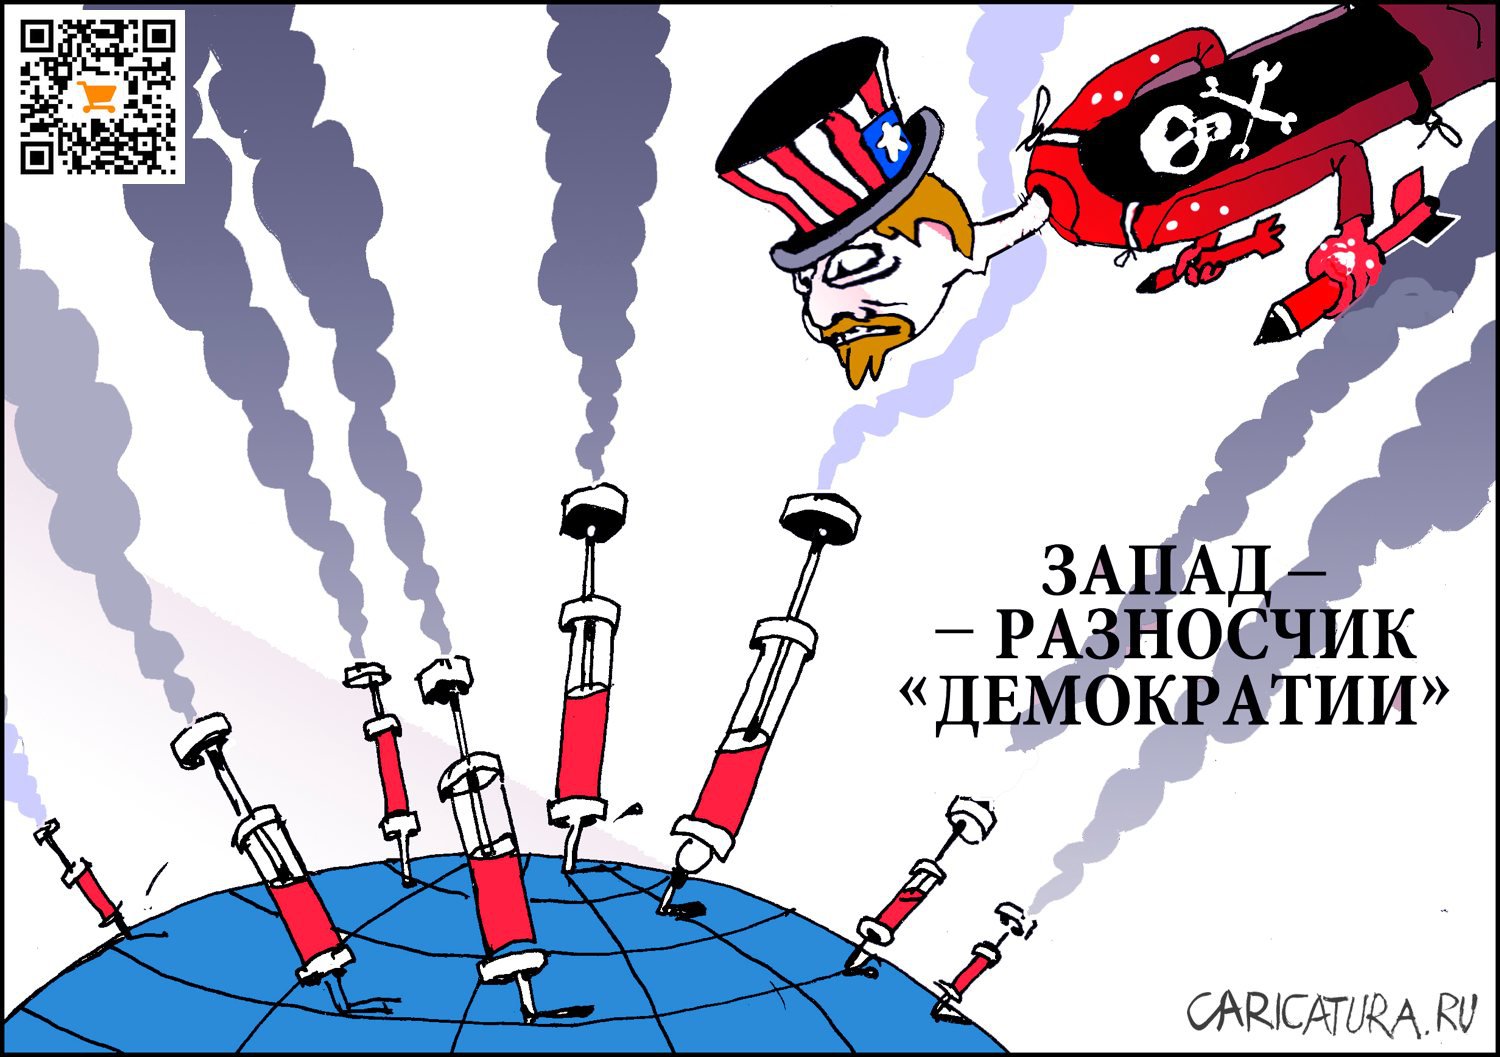 Карикатура "Разносчик демократии", Александр Уваров